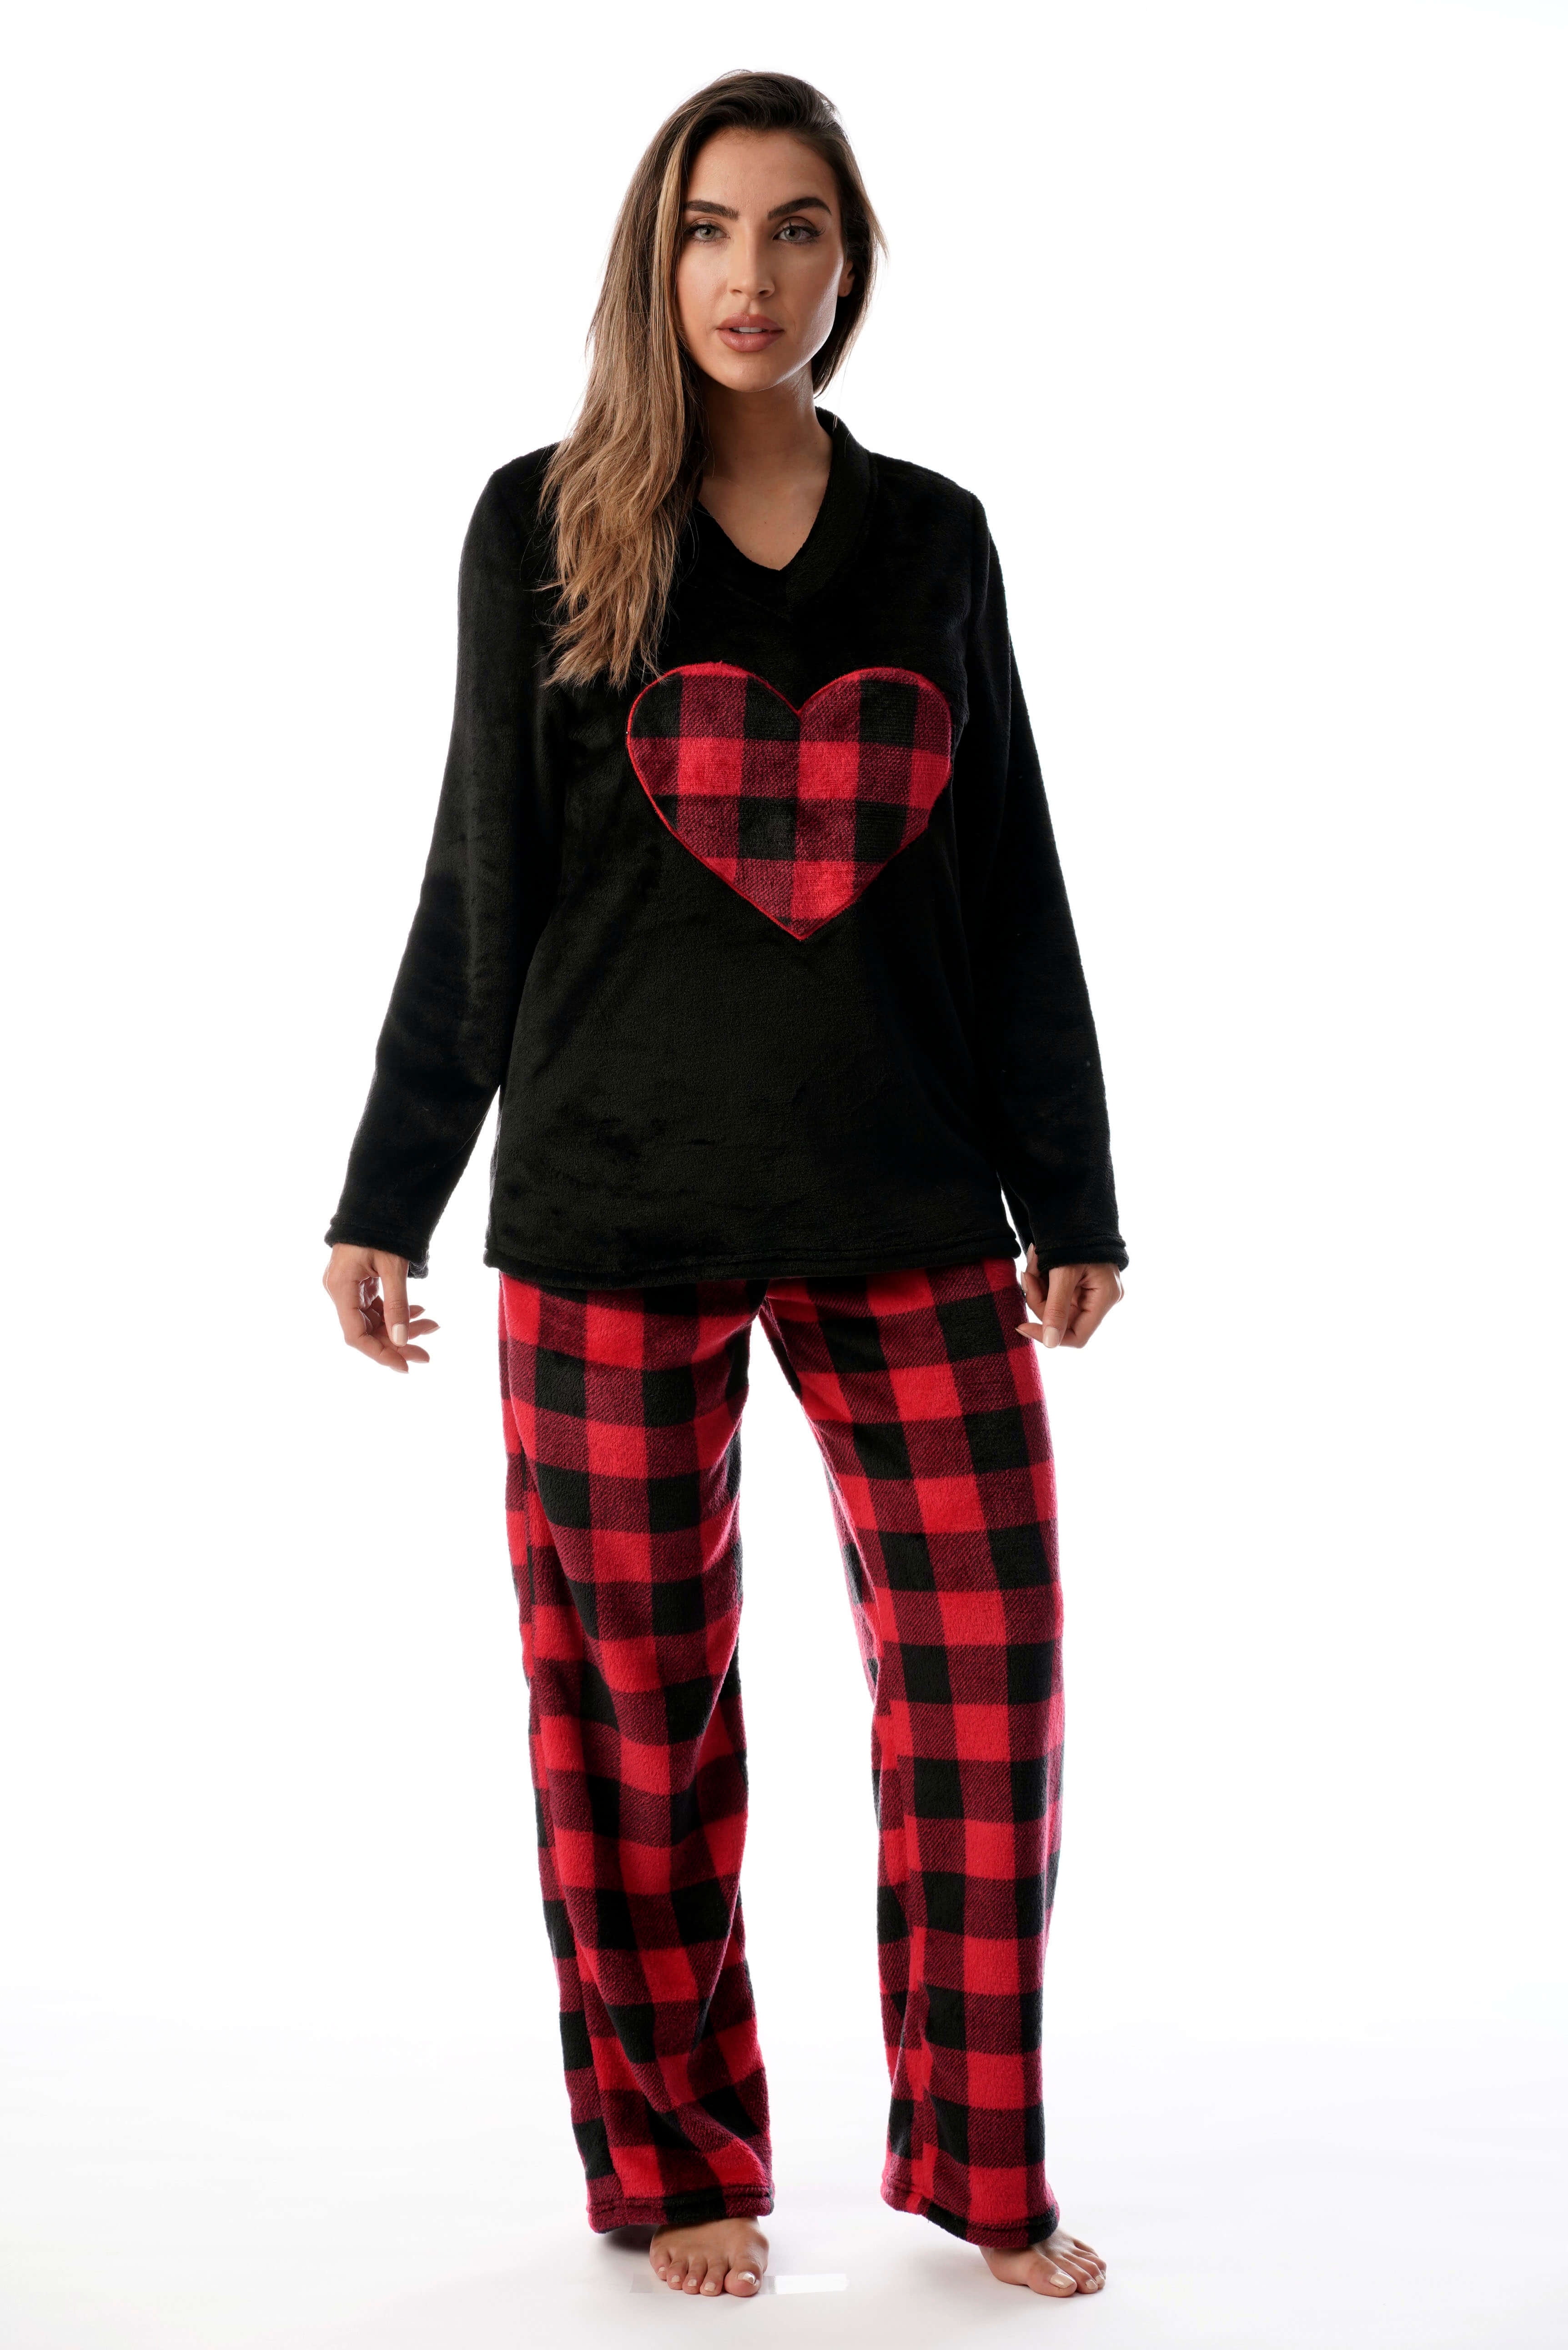 Just Love Just Love Plush Pajama Sets For Women 6742 10443 2x Black